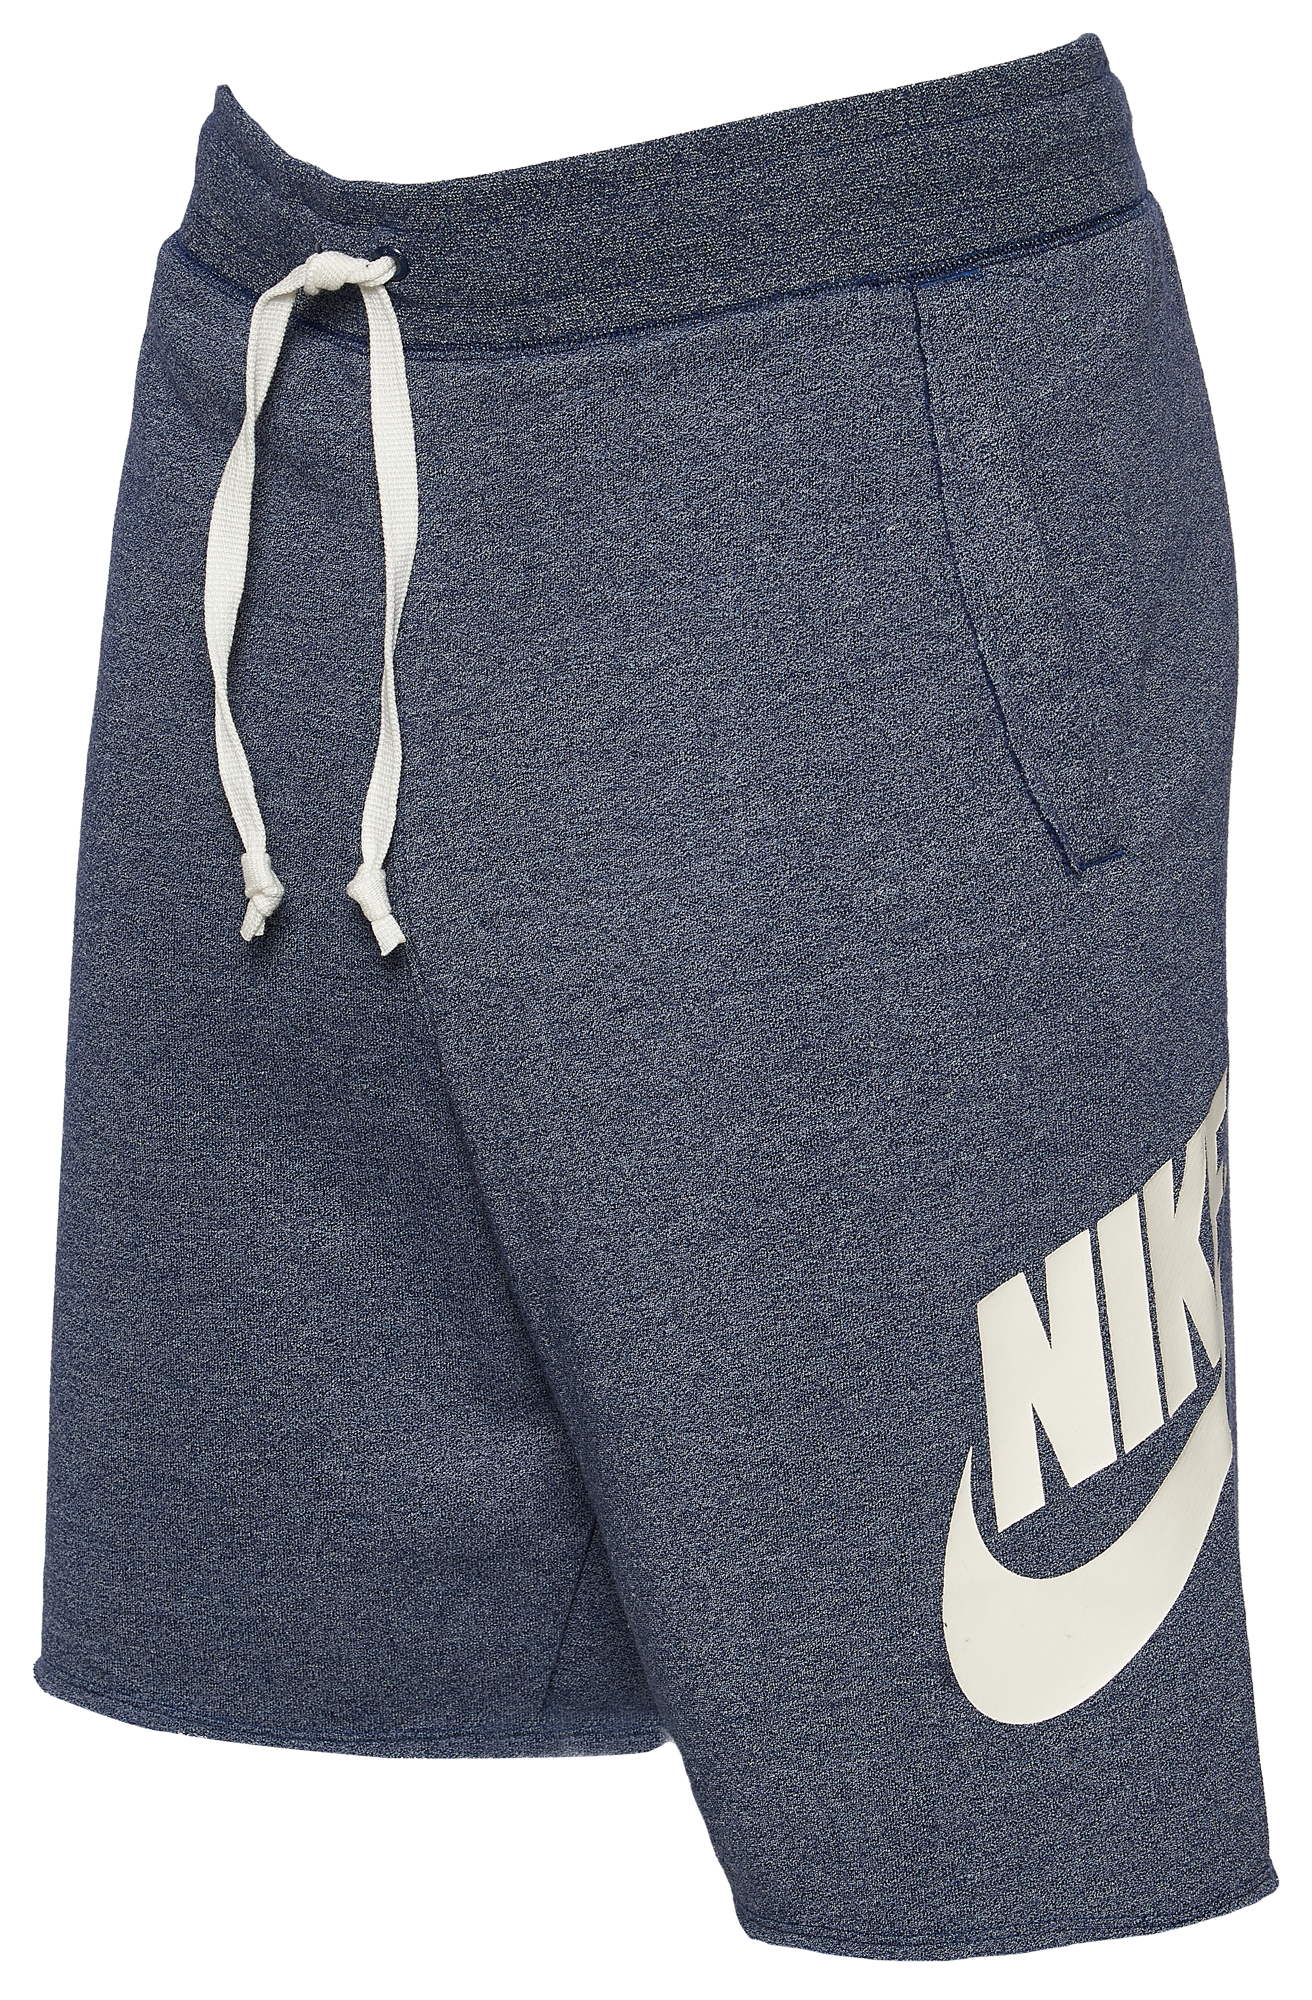 Nike Alumni Shorts - Men's